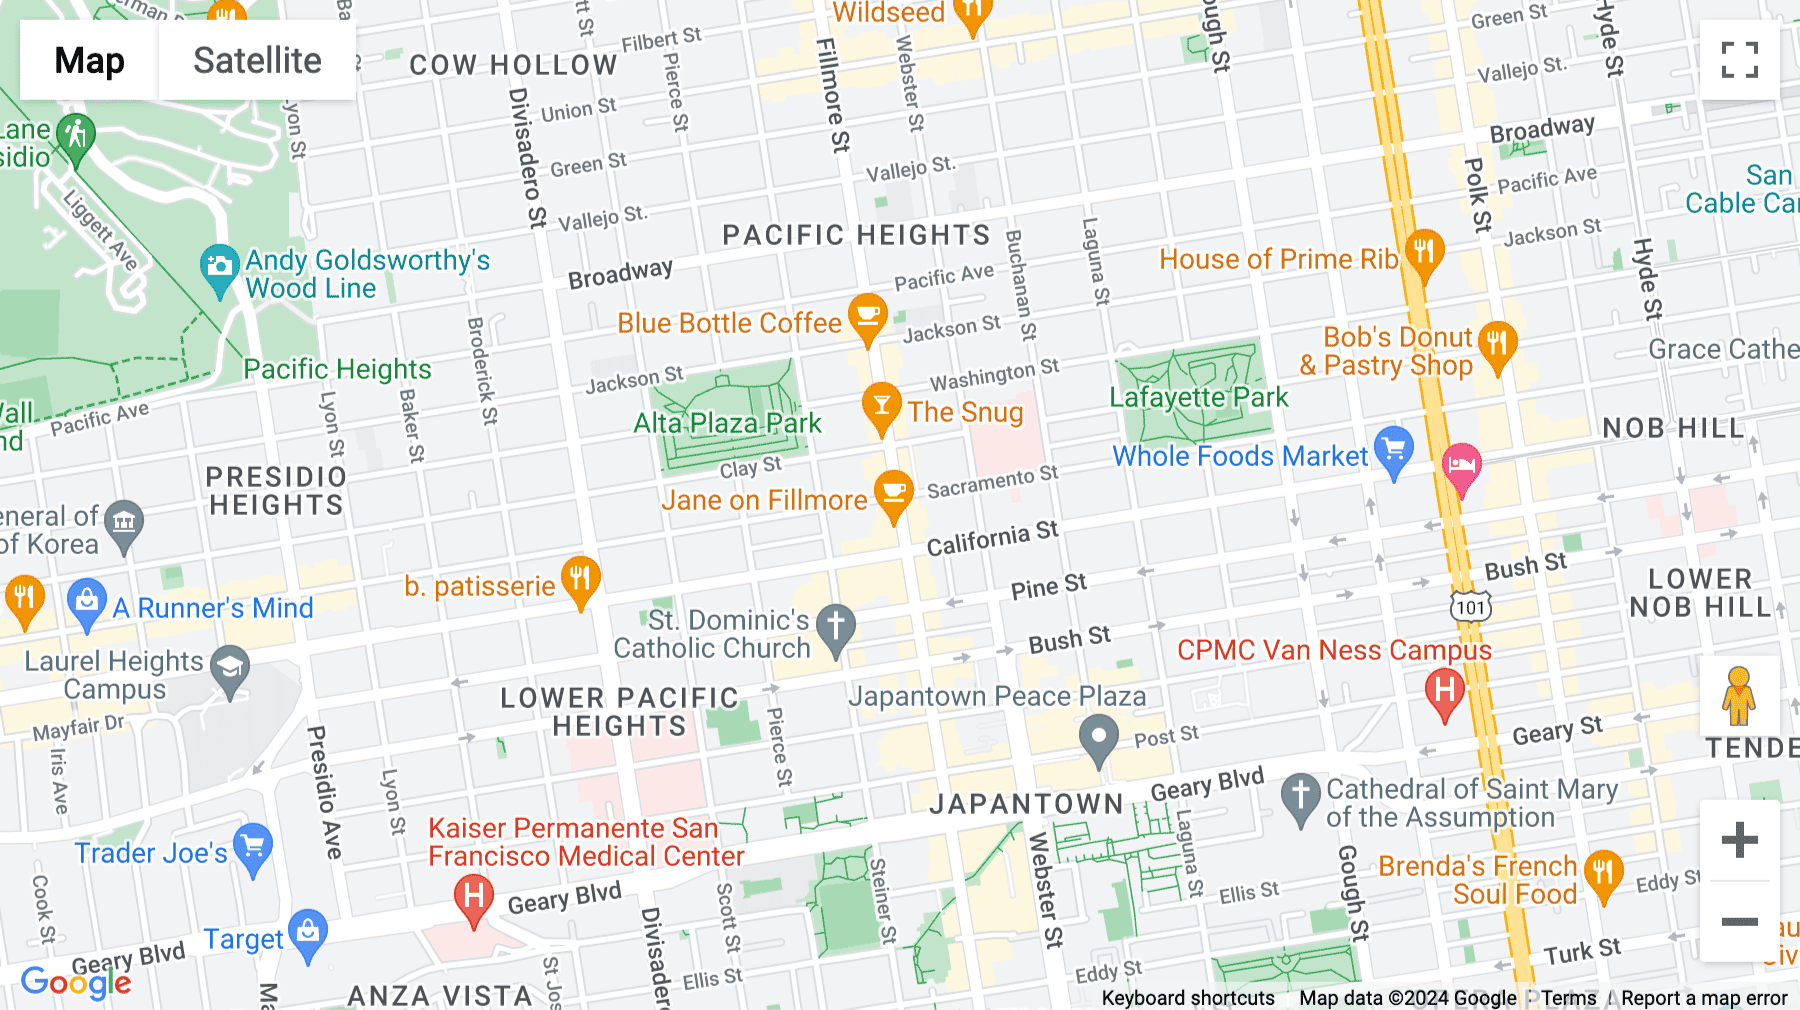 Click for interative map of 2193 Fillmore Street, San Francisco